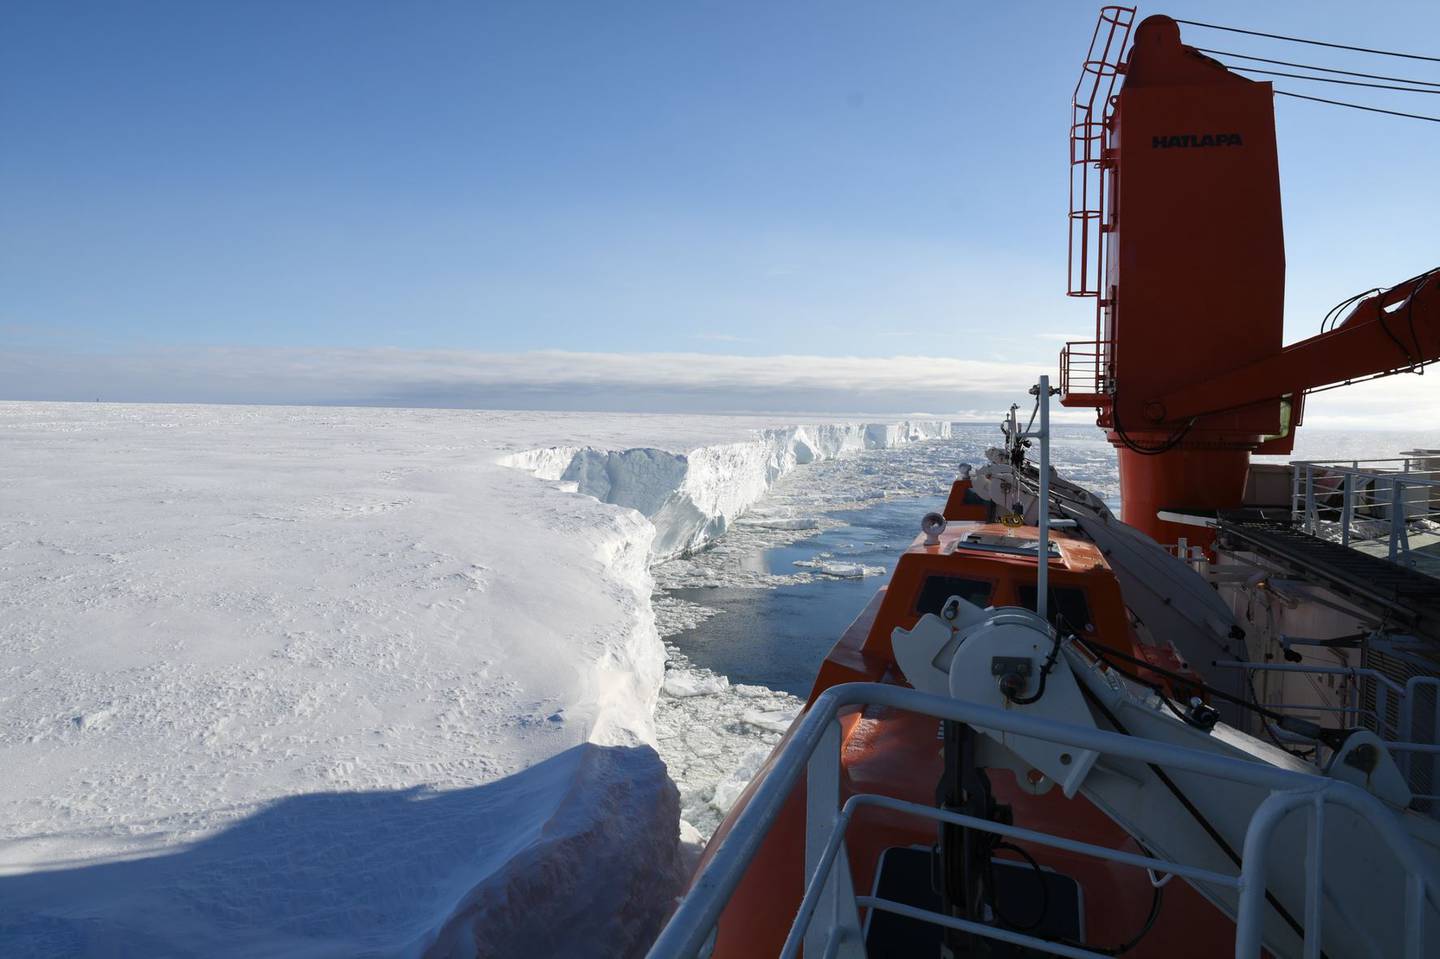 Here, Sven Oosterhuis' team sails along Antarctica's coral reefs.